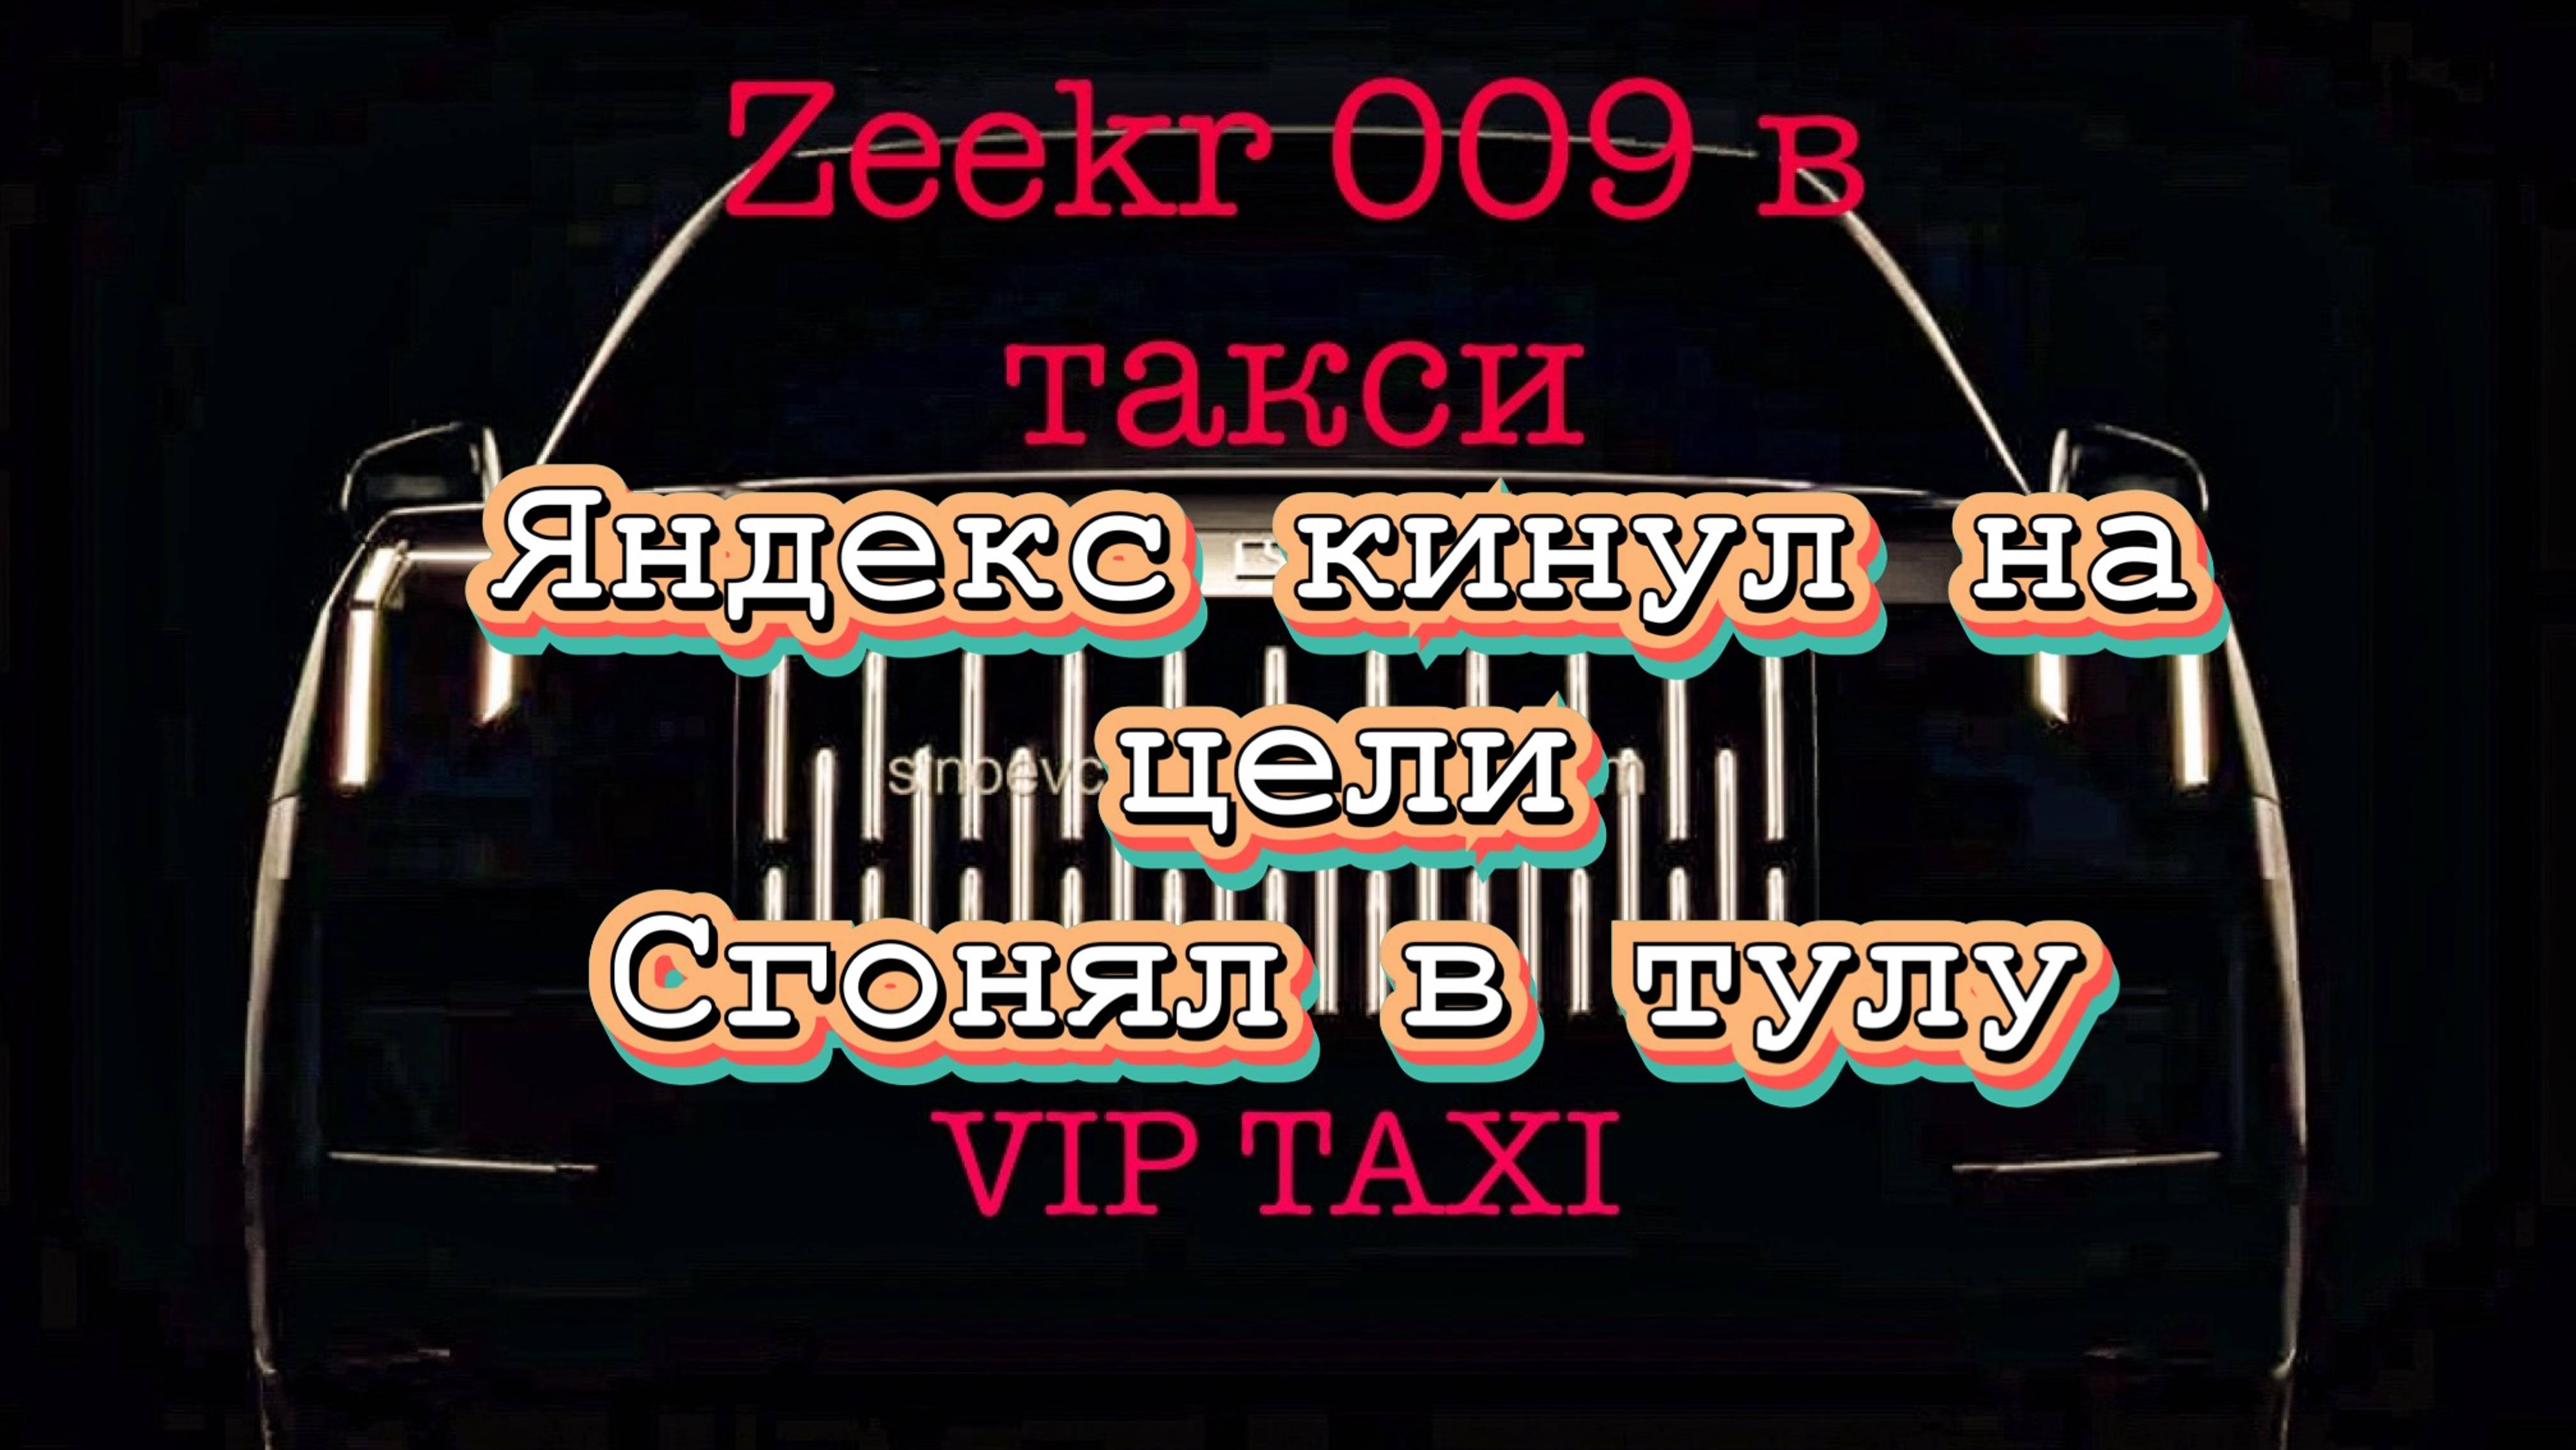 Веселый Четверг  /таксую на zeekr009/elite taxi/яндекс такси#elite #taxi #vip #zeekr #yandextaxi